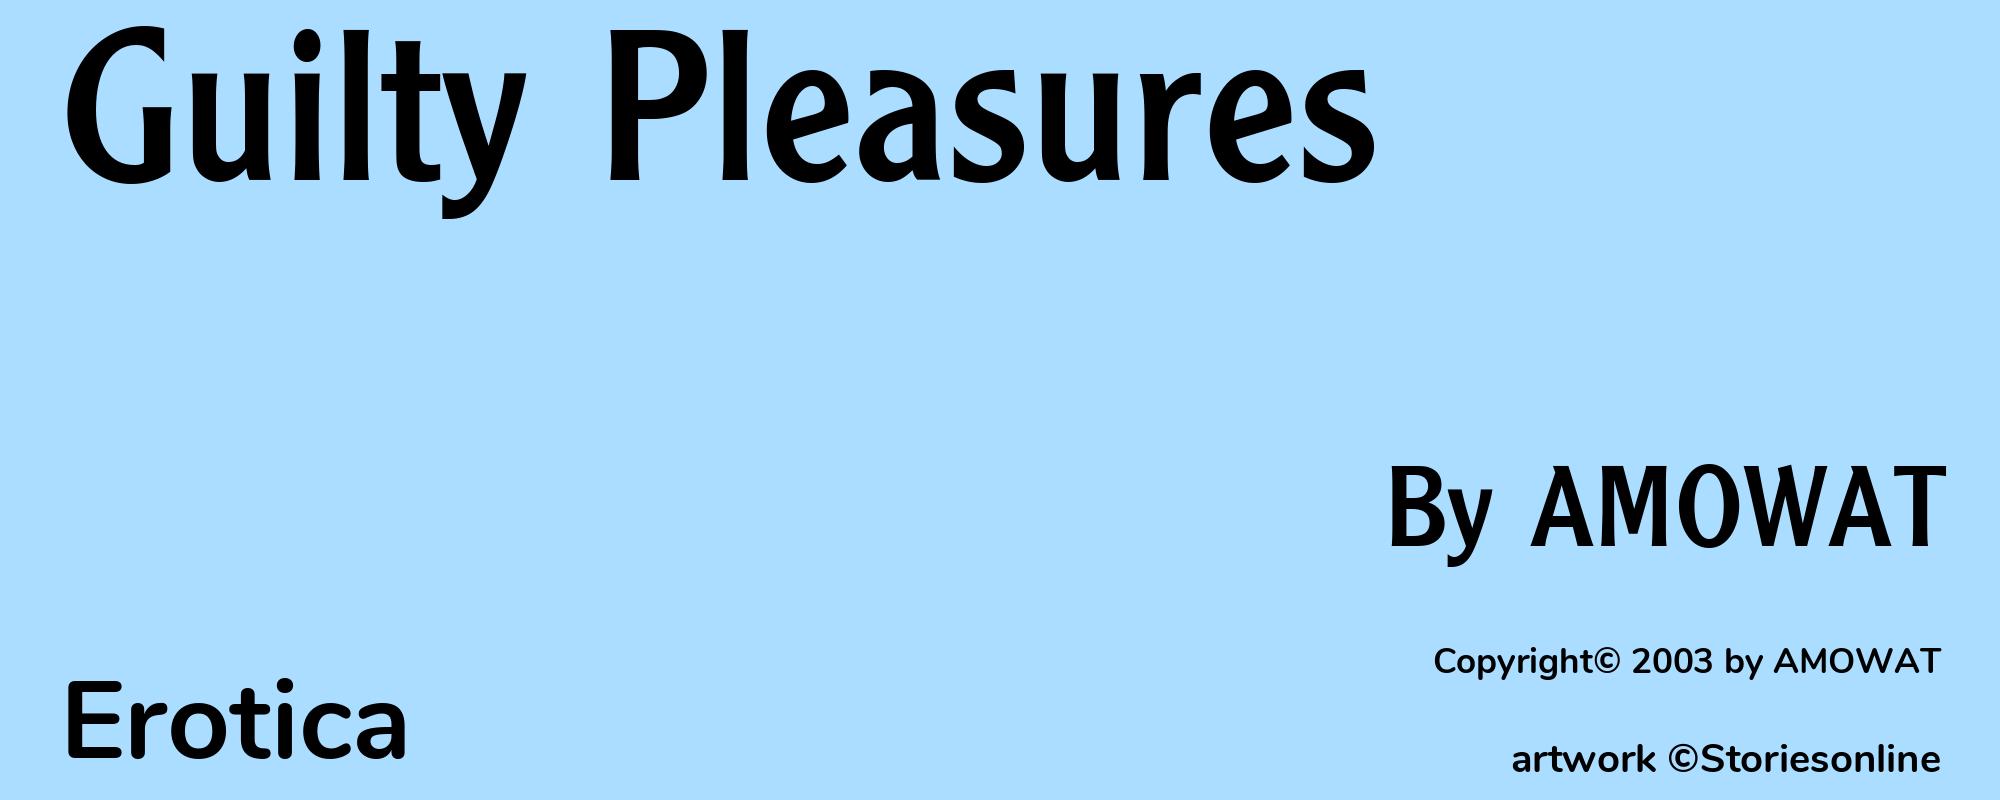 Guilty Pleasures - Cover